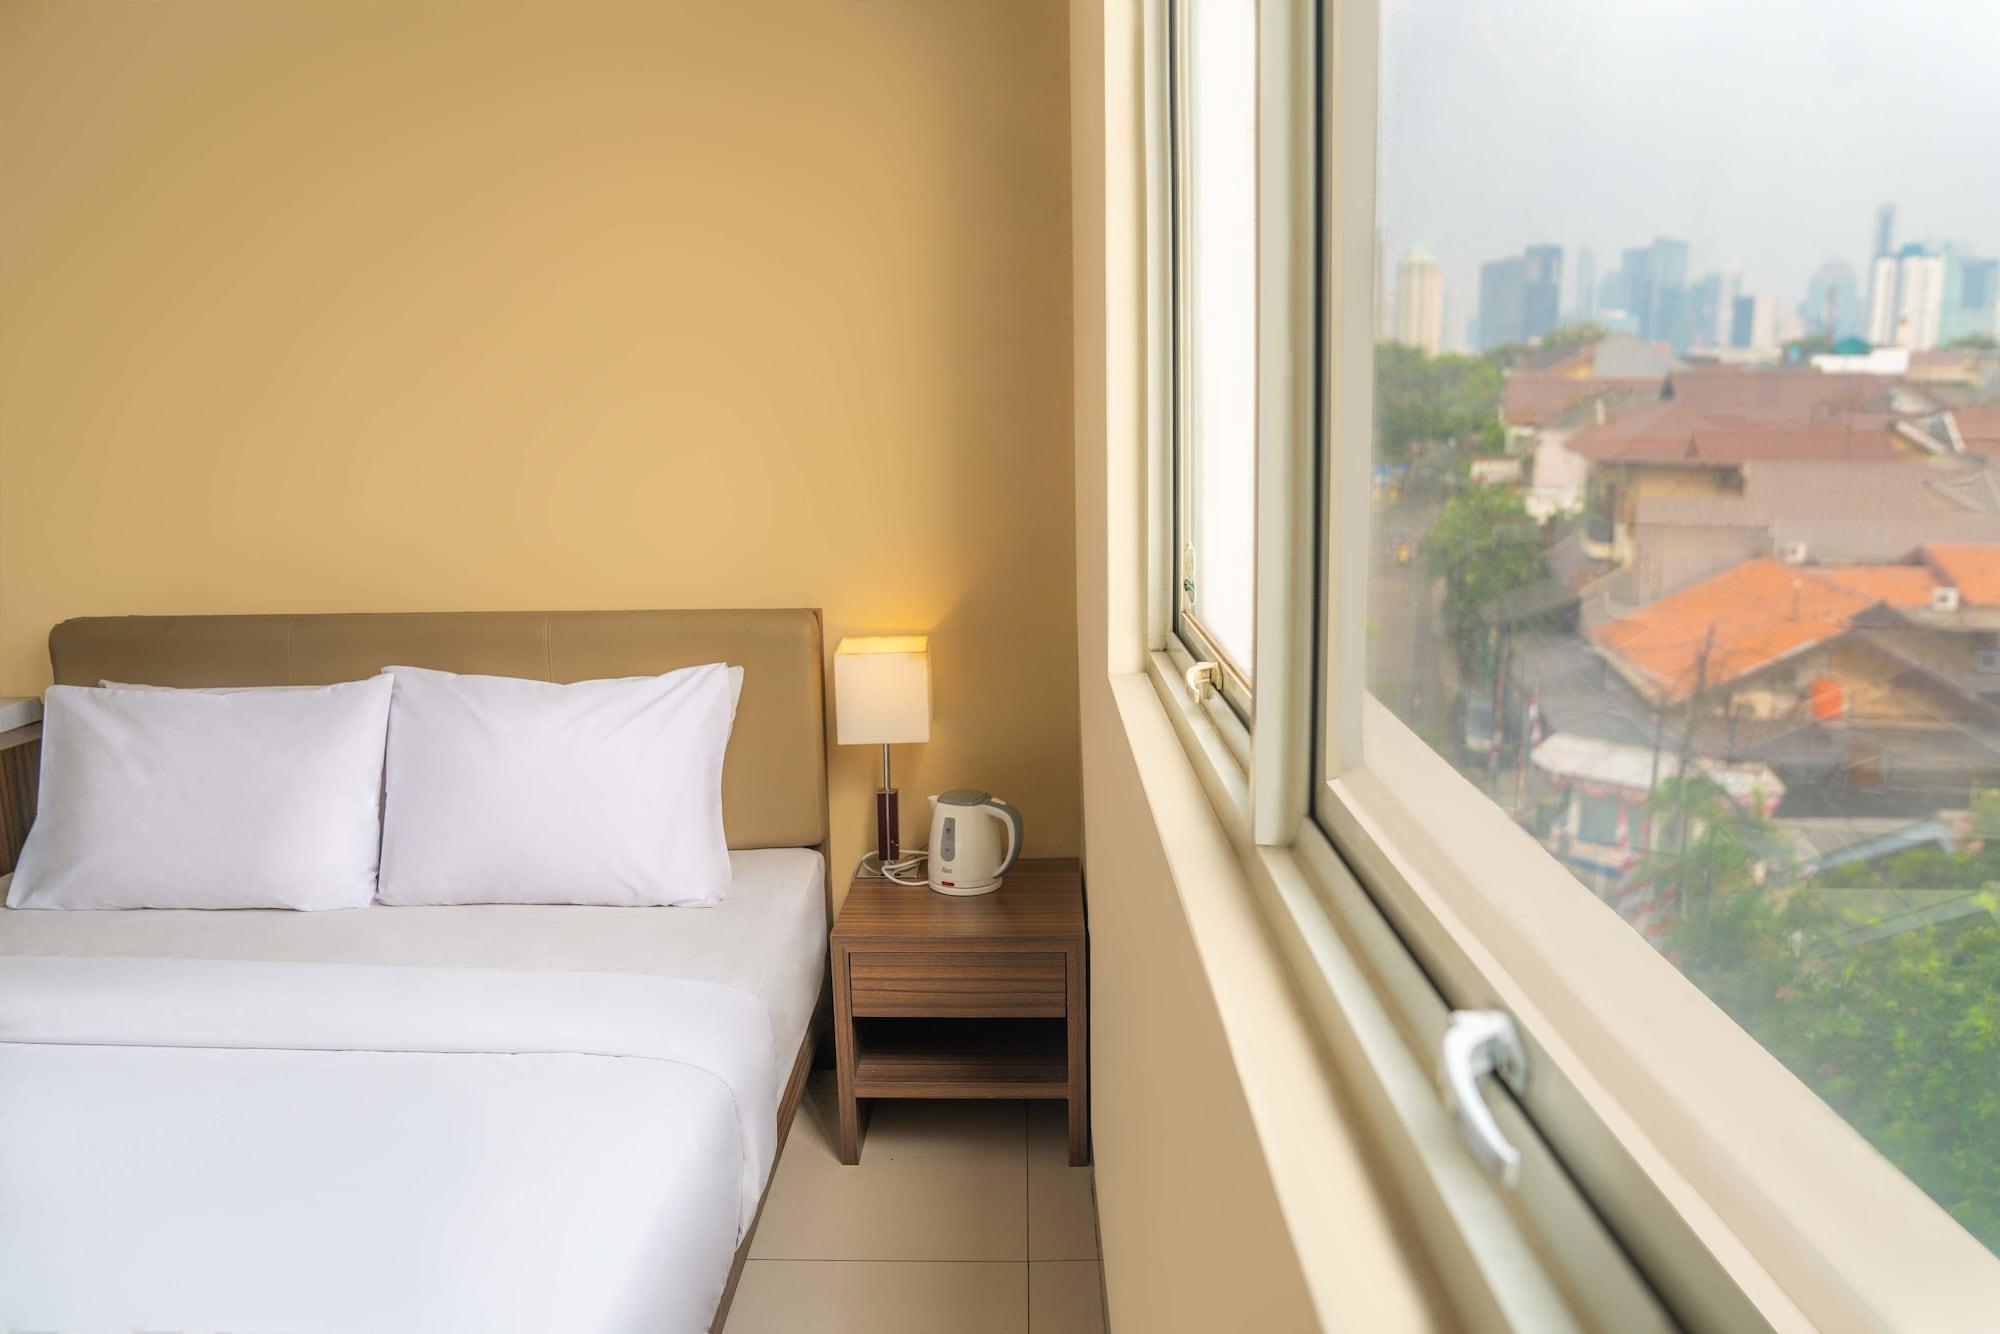 Legreen Suite Gatot Subroto Jakarta Exterior photo